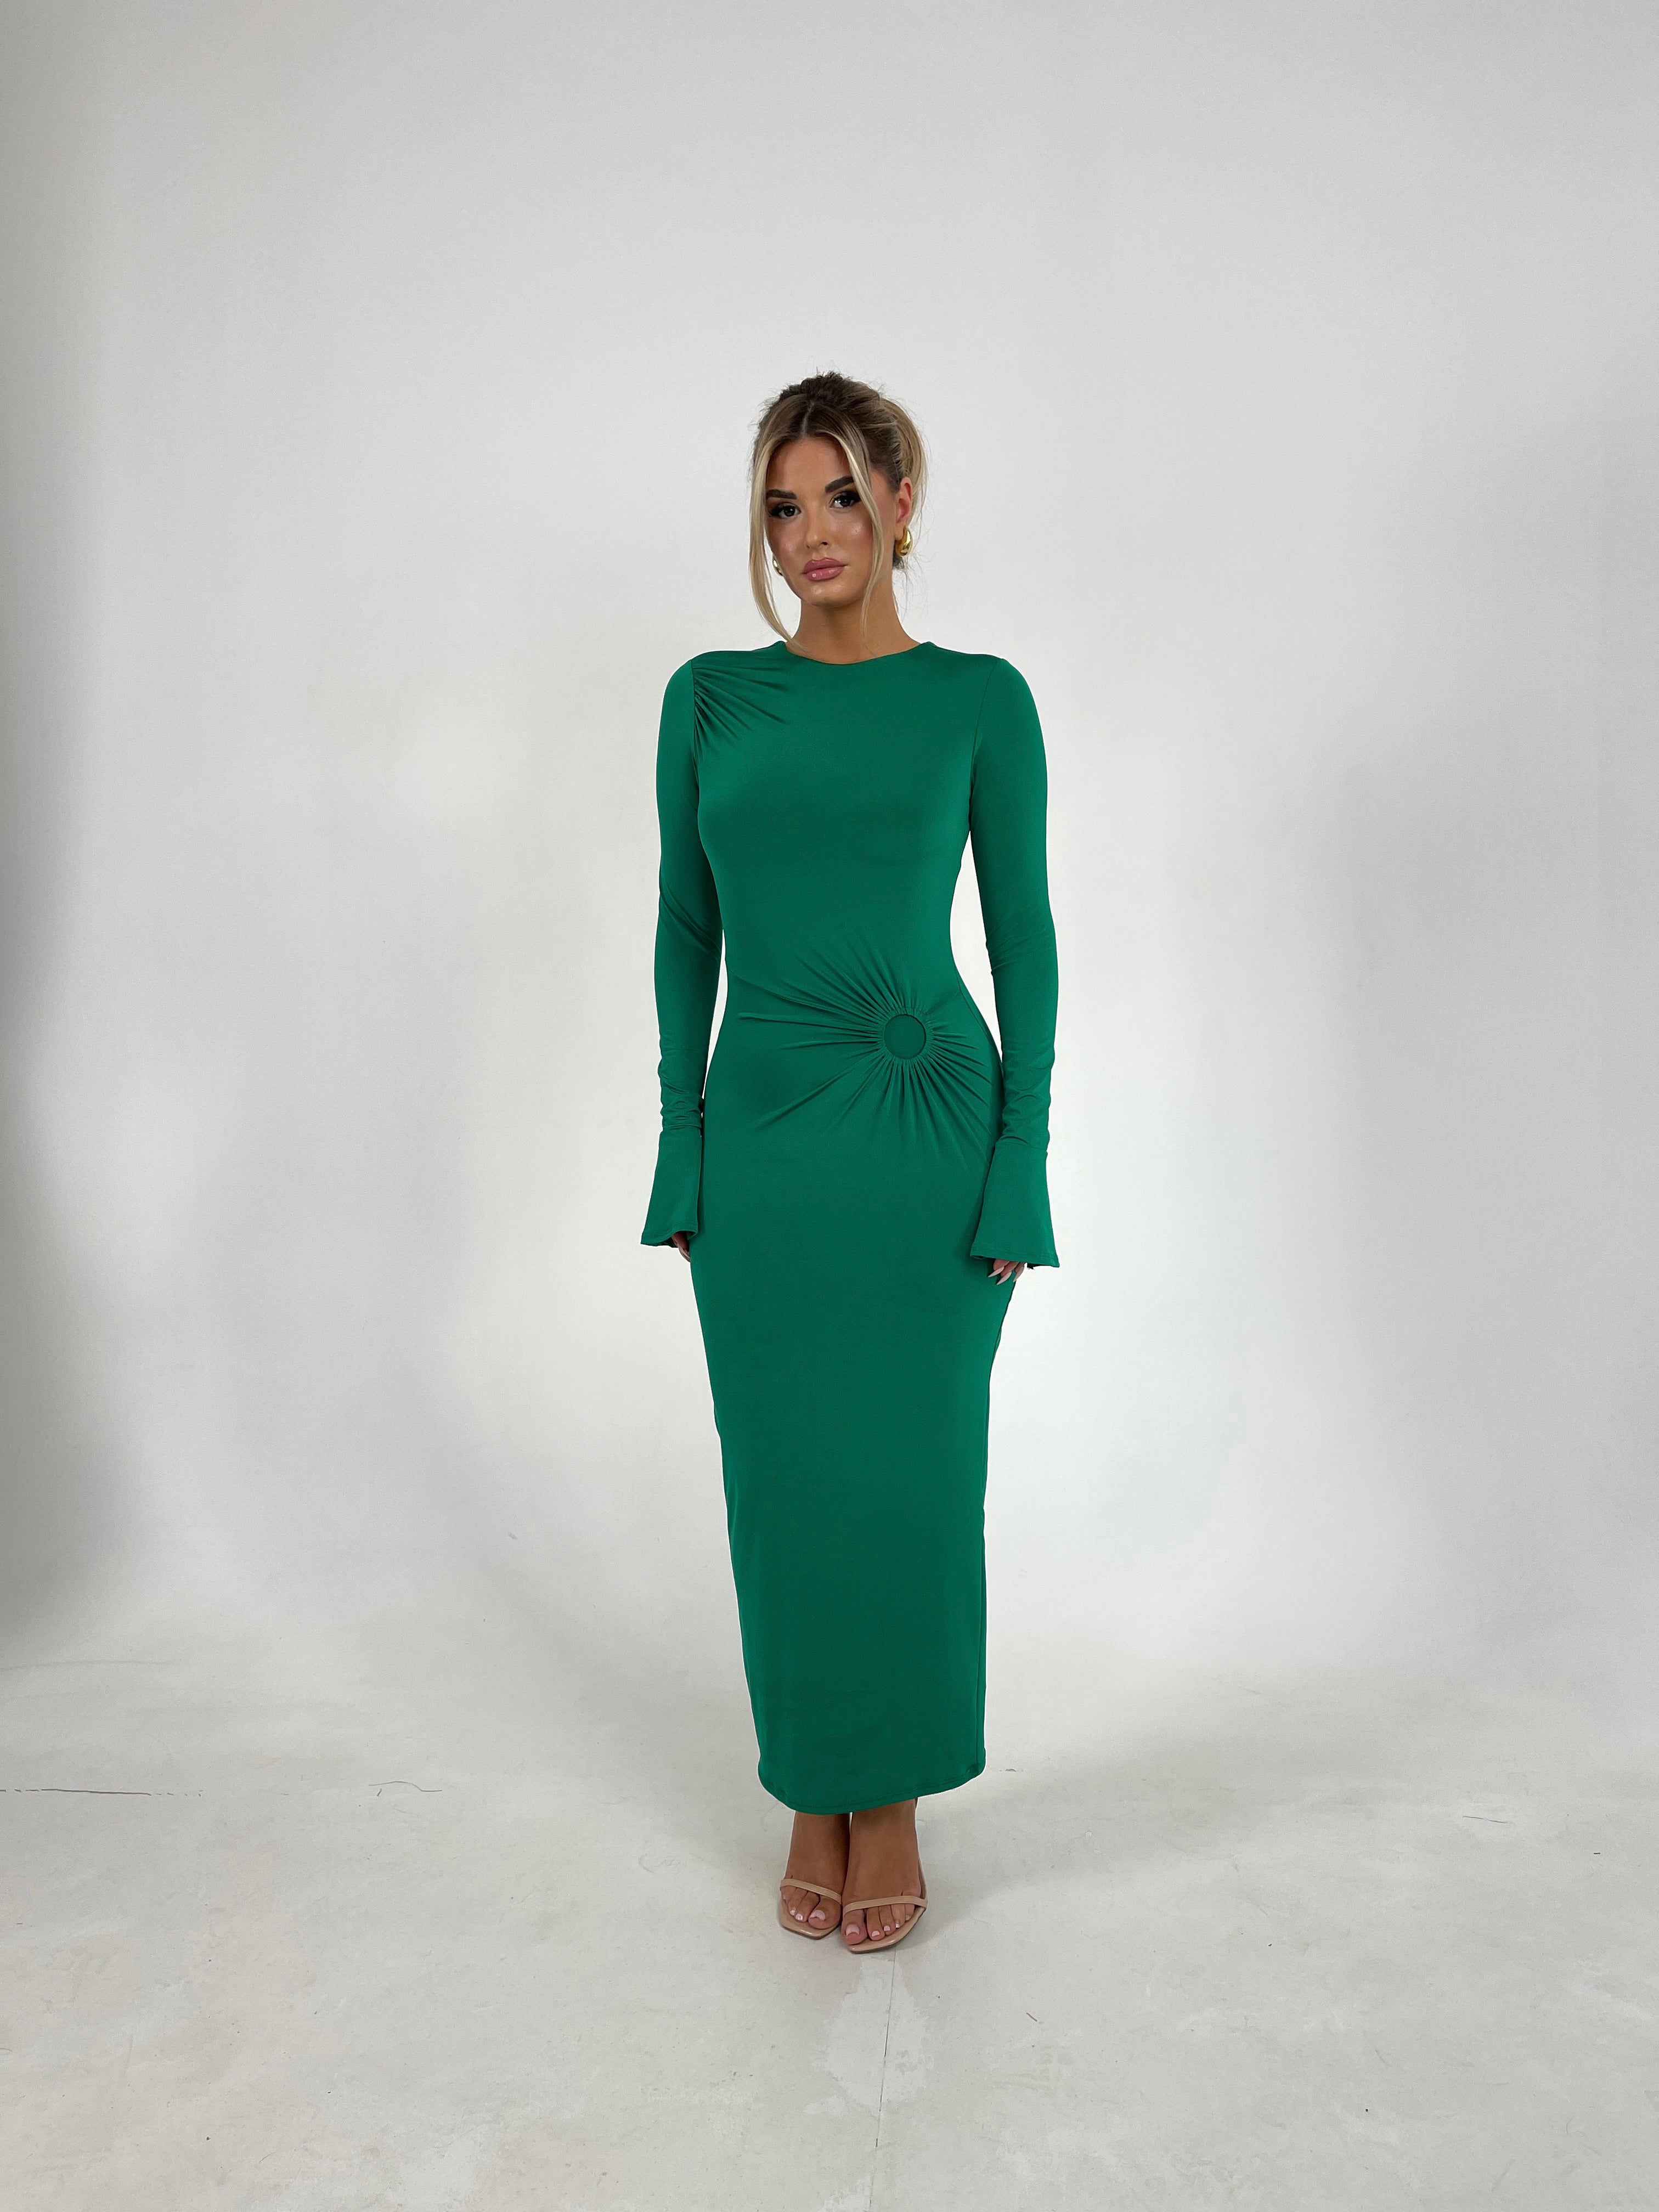 Laneya Green Dress